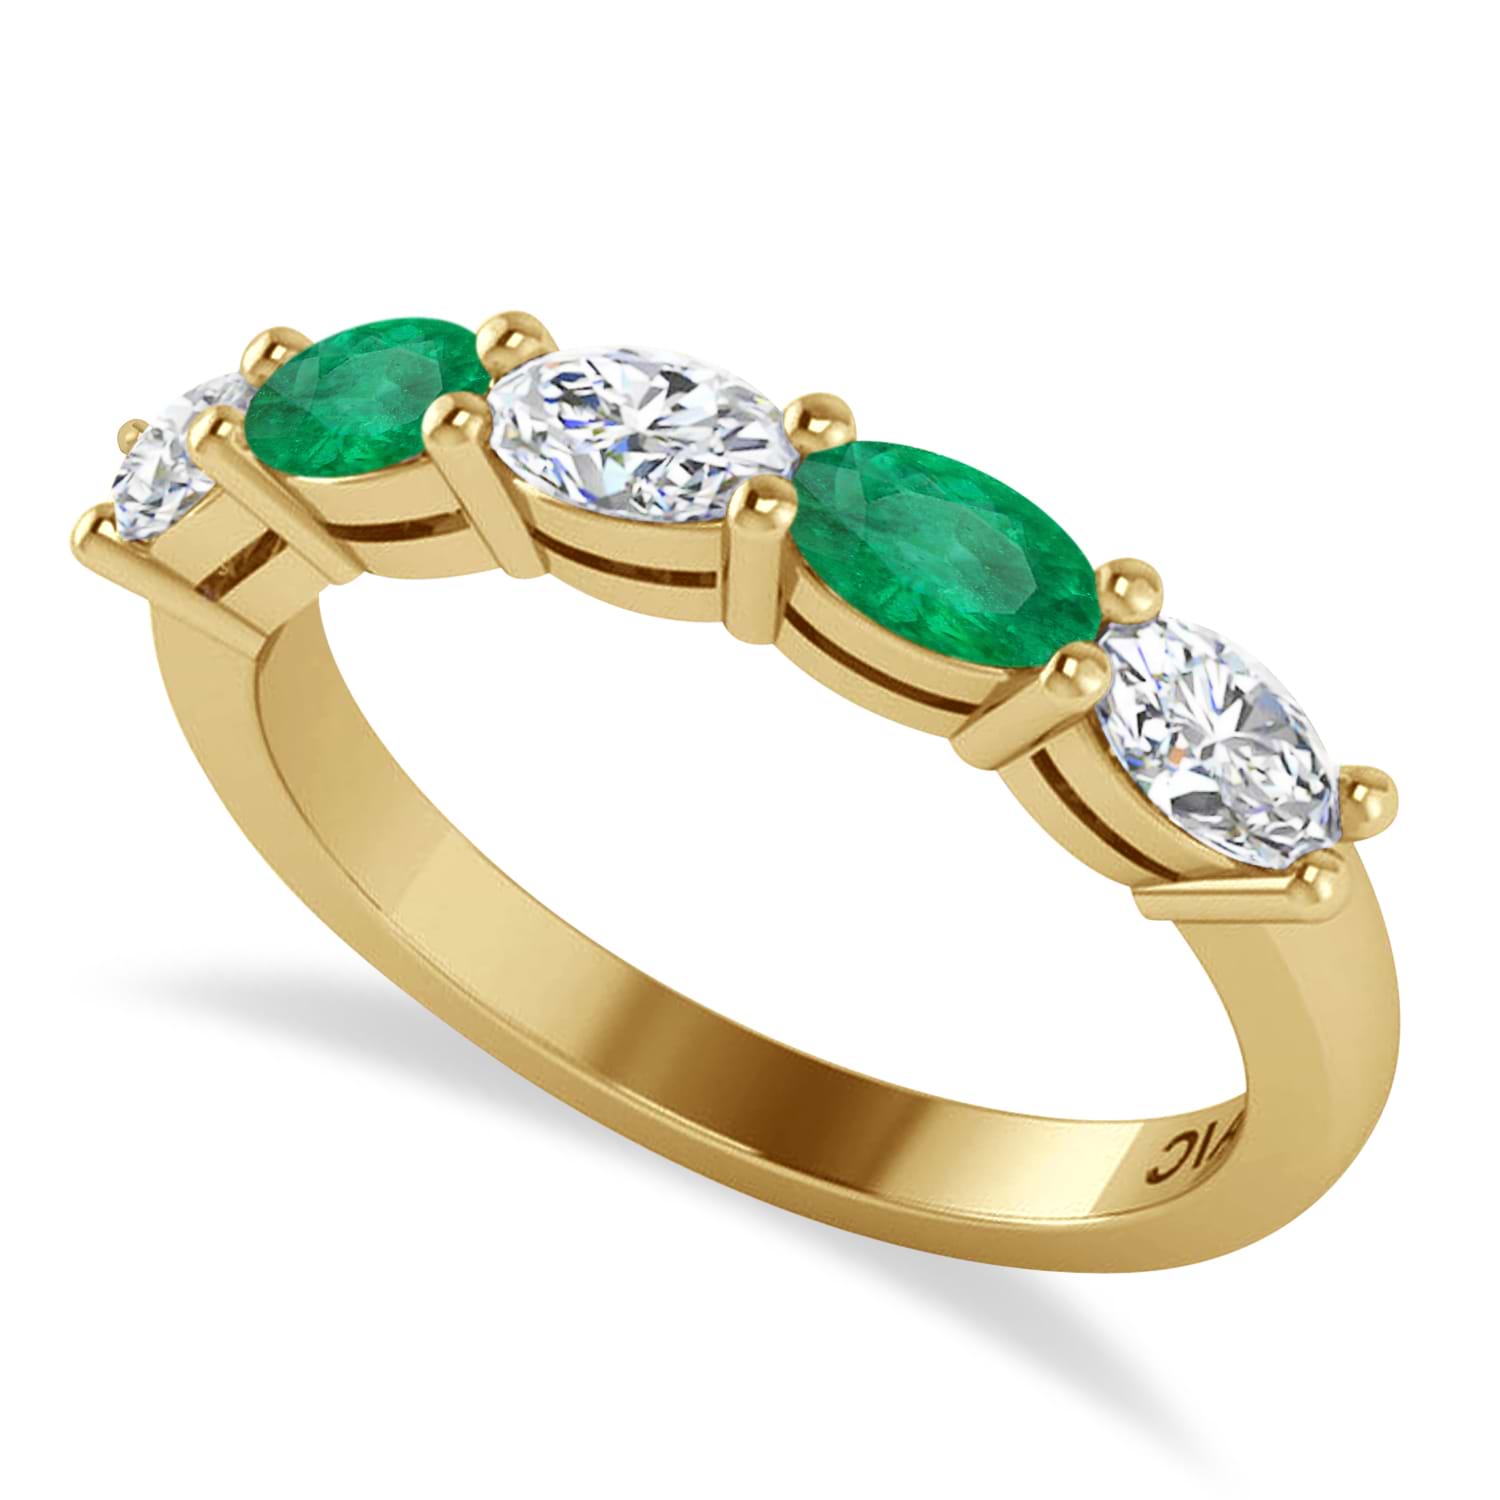 Oval Diamond & Emerald Five Stone Ring 14k Yellow Gold (1.25ct)